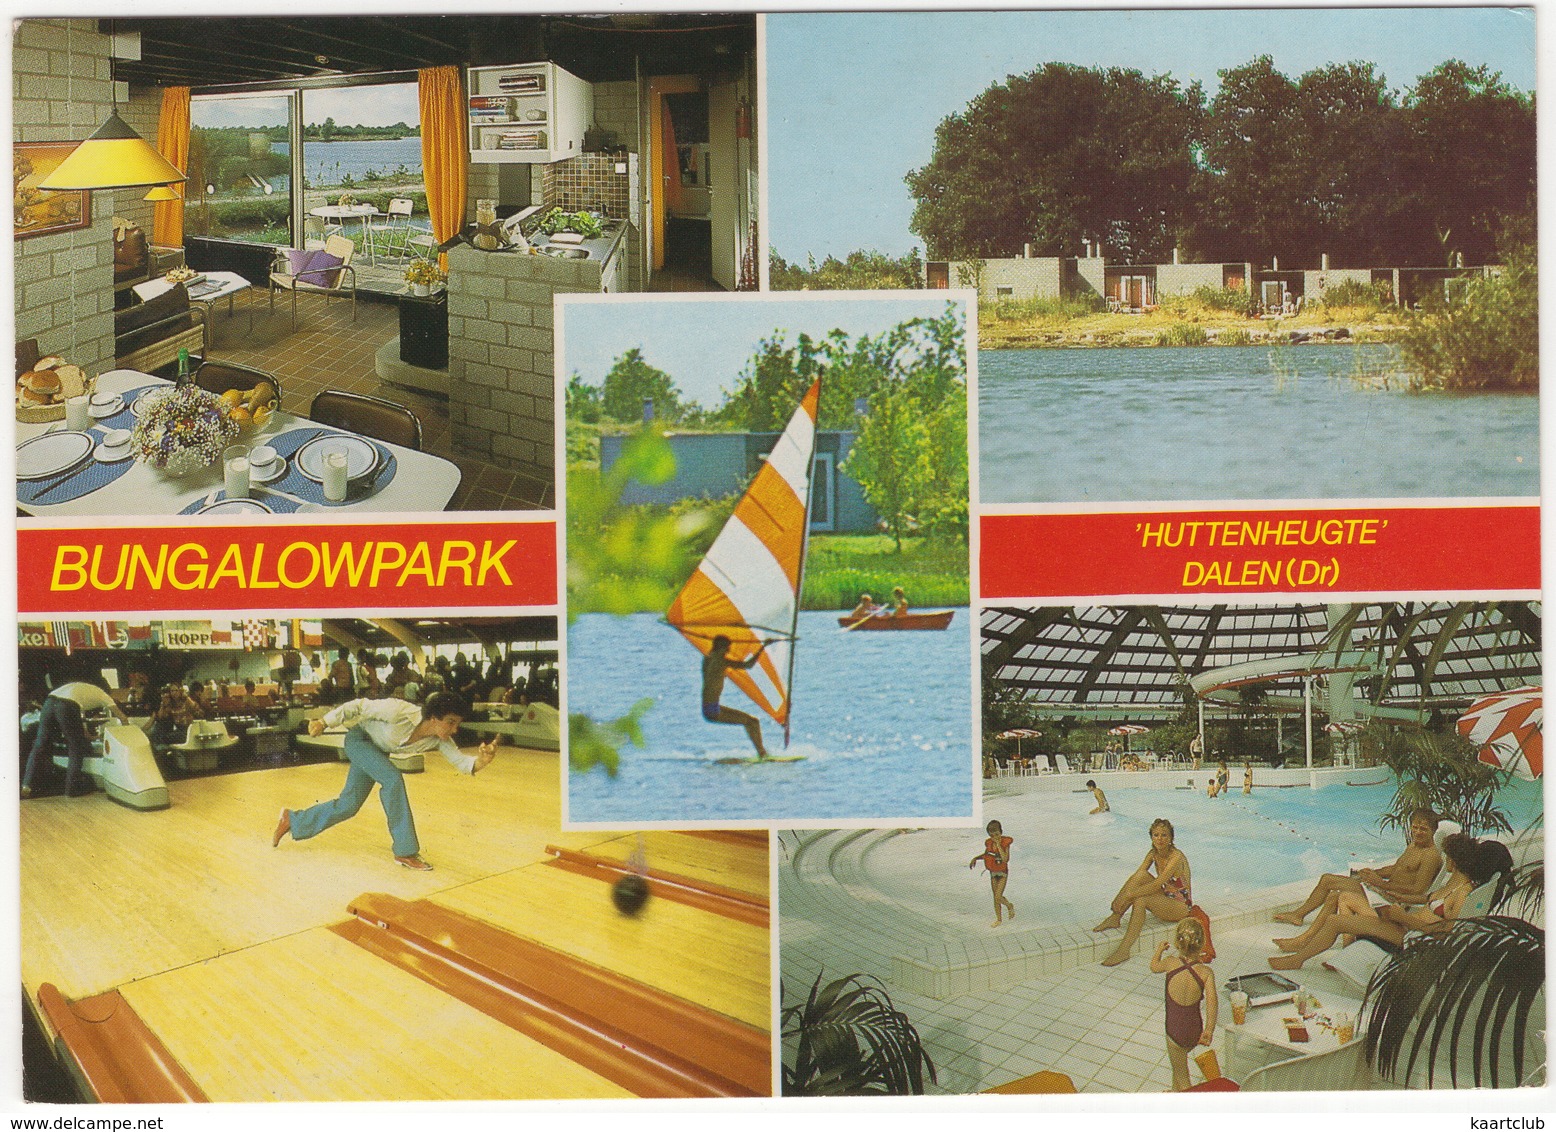 Dalen - Bungalowpark 'Huttenheugte' - (BOWLING, WINDSURFING, SWIMMINGPOOL) - Sporthuis Centrum ***** - Coevorden